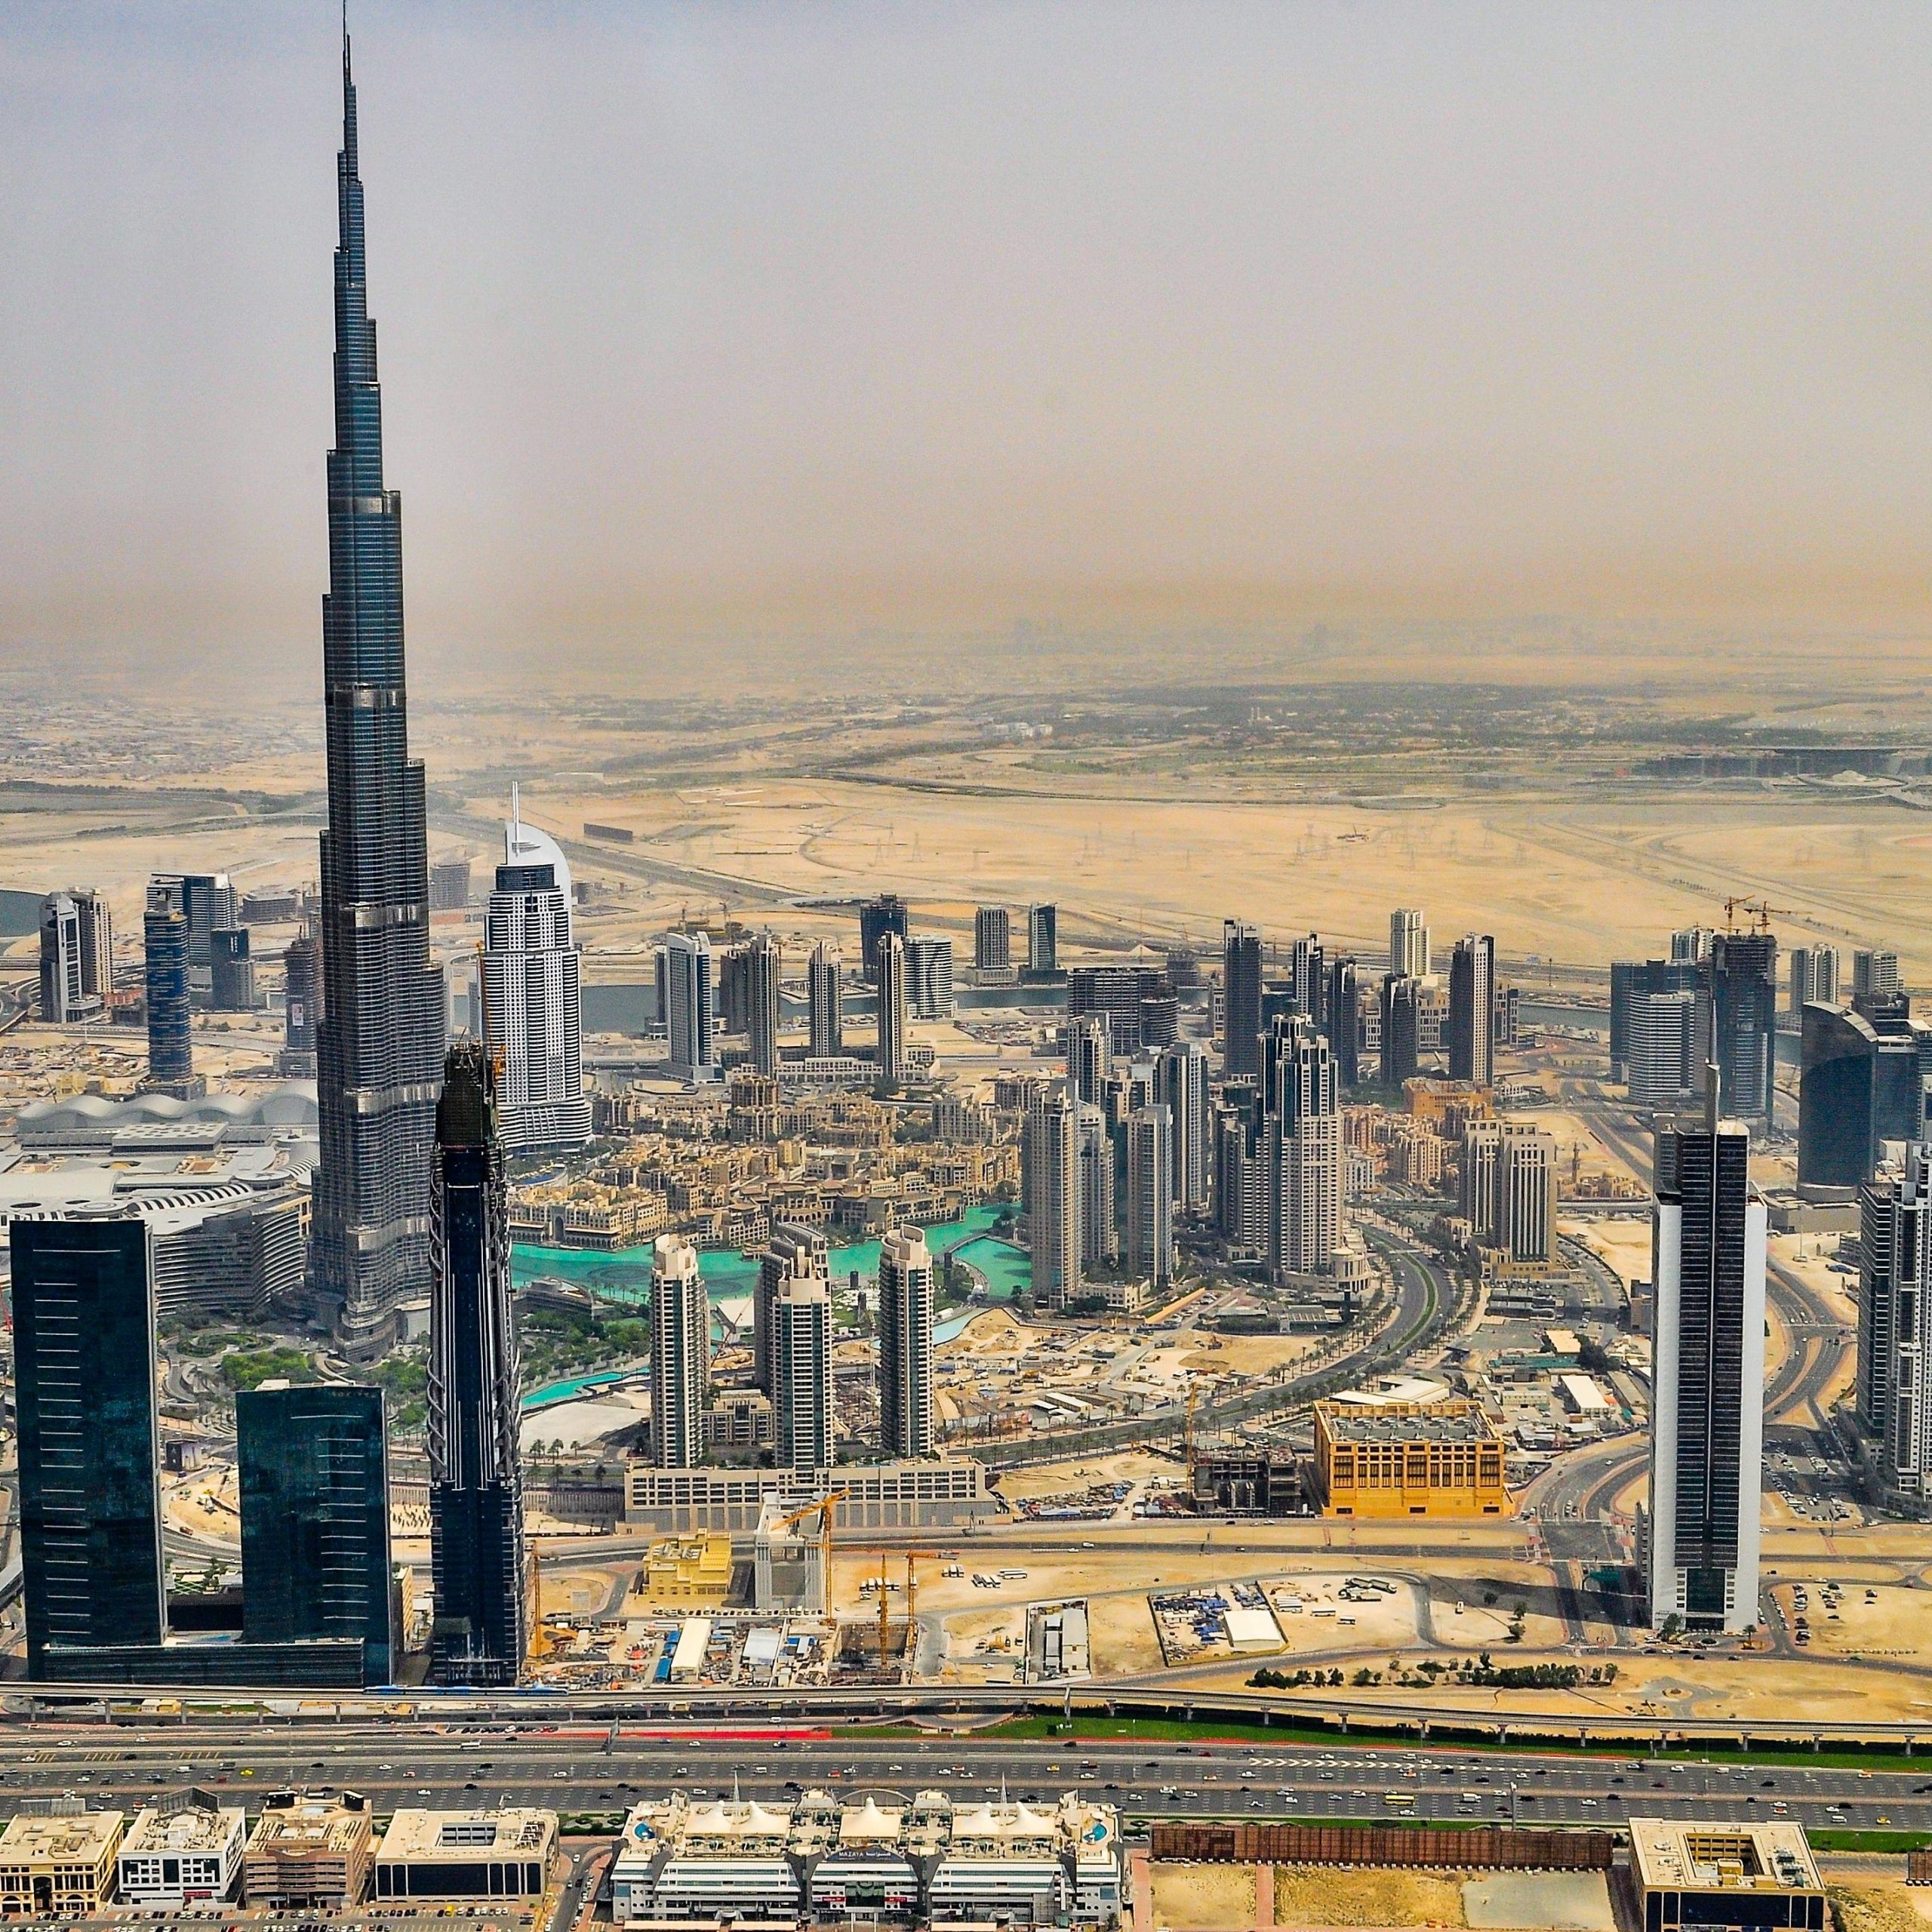 Burj Khalifa Ticket with The Cafe Treat